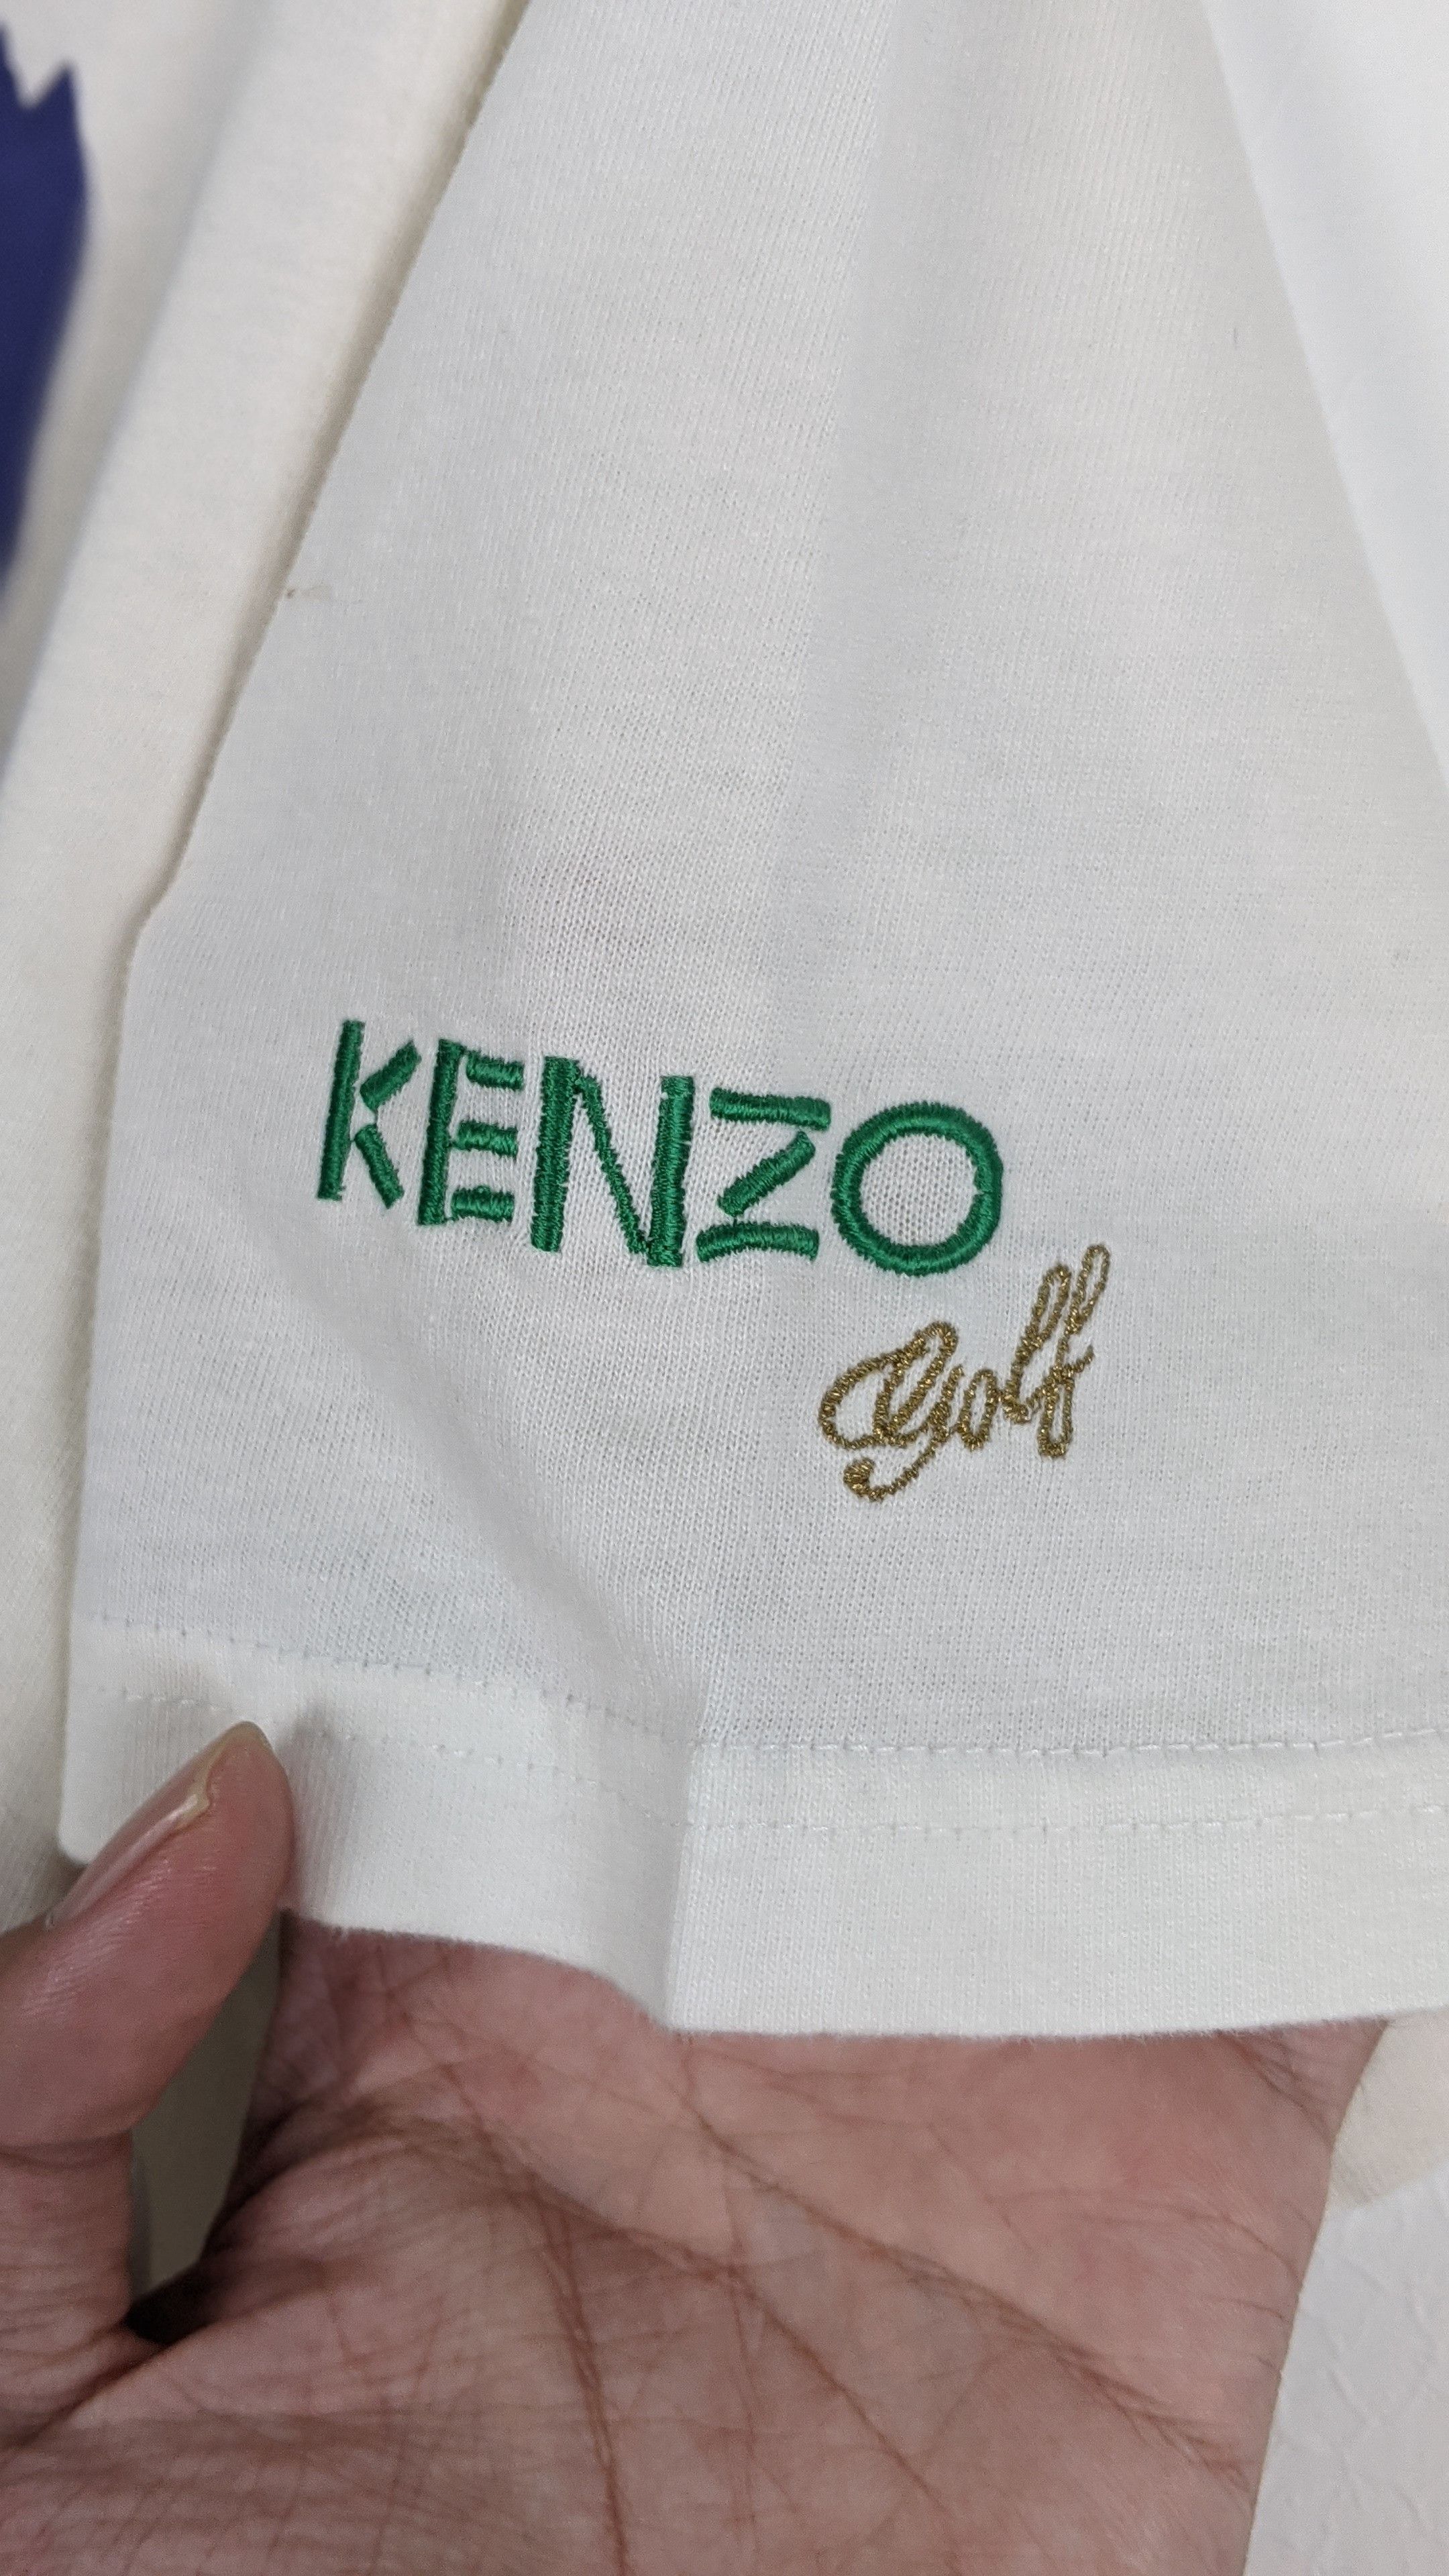 Kenzo Golf shirt - 4